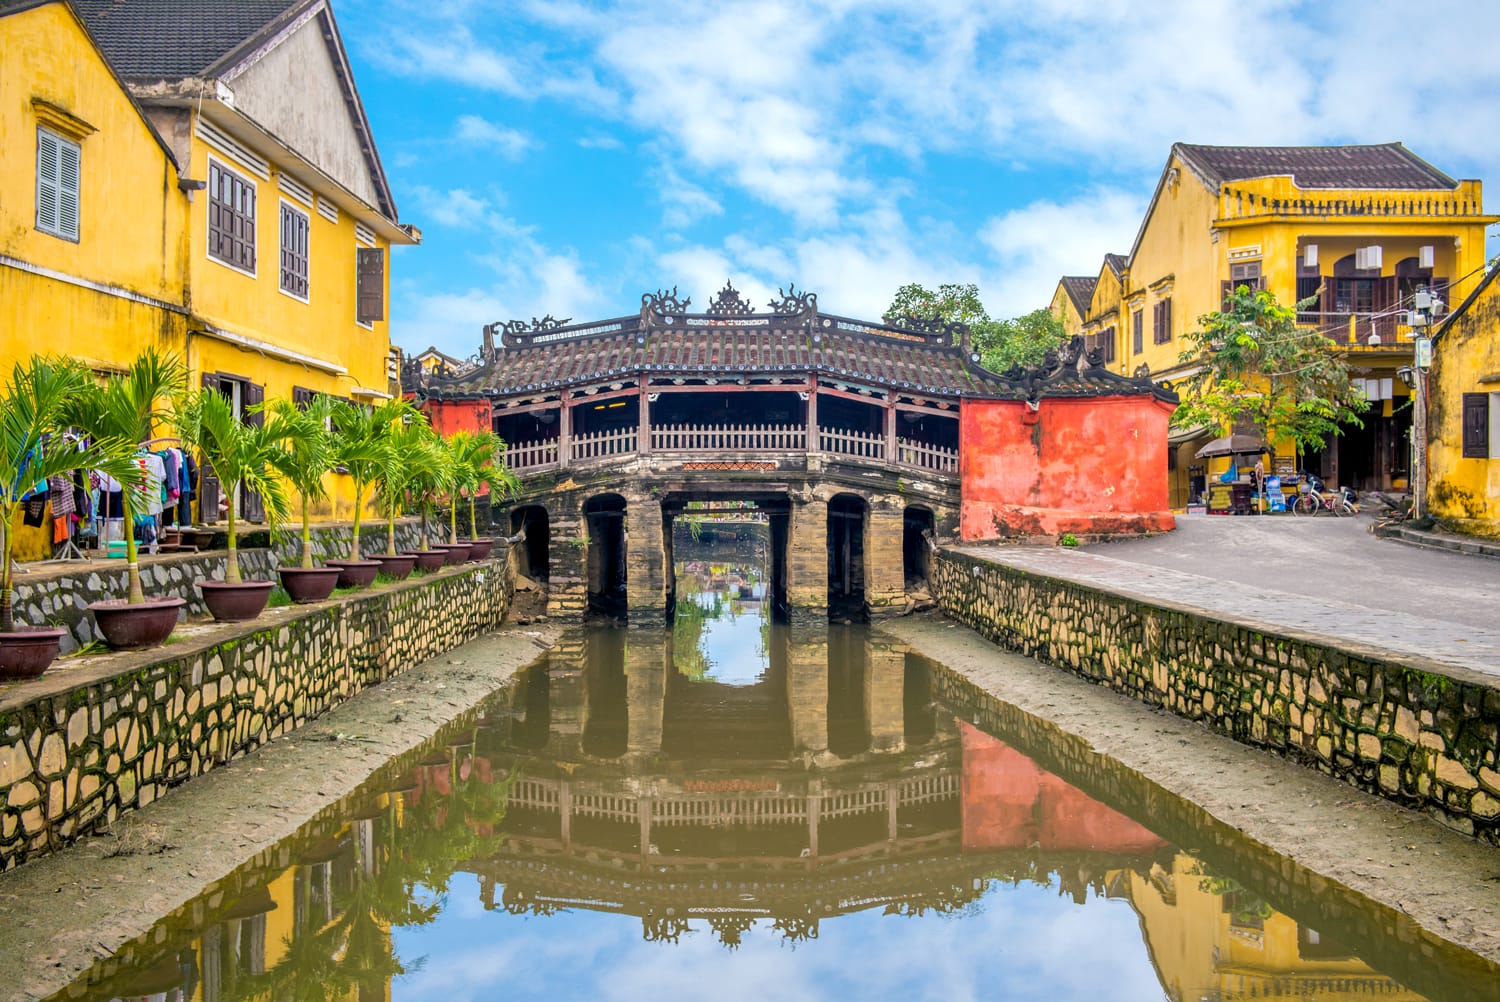 Japanese Covered Bridge, also called Lai Vien Kieu in Hoi An, Vietnam